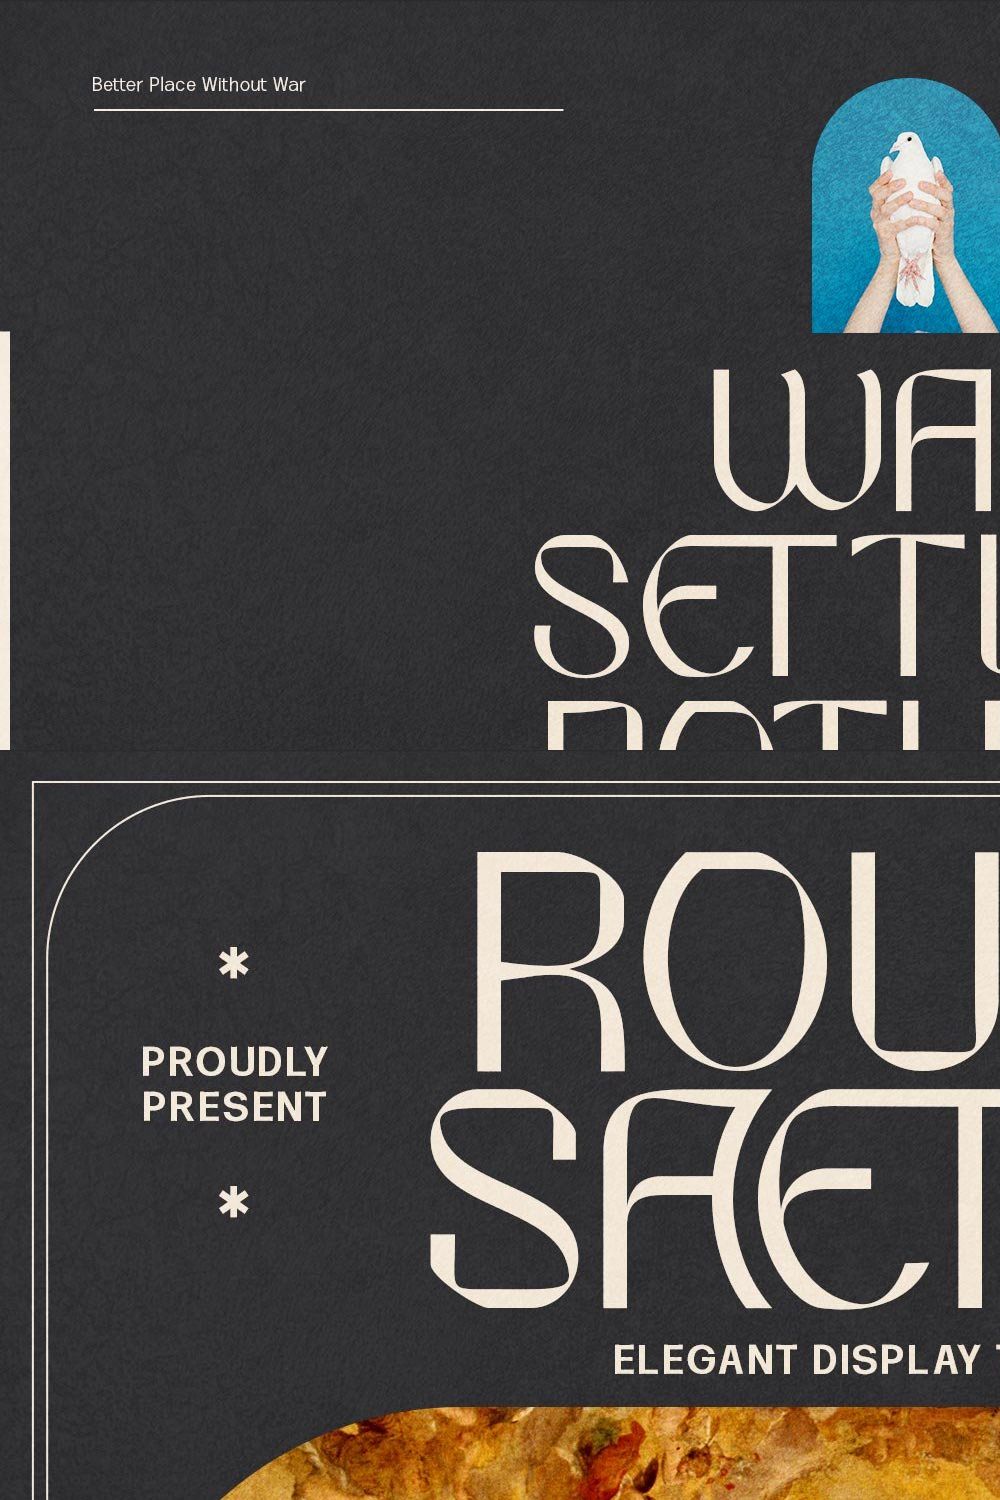 Round Saetan Typeface pinterest preview image.